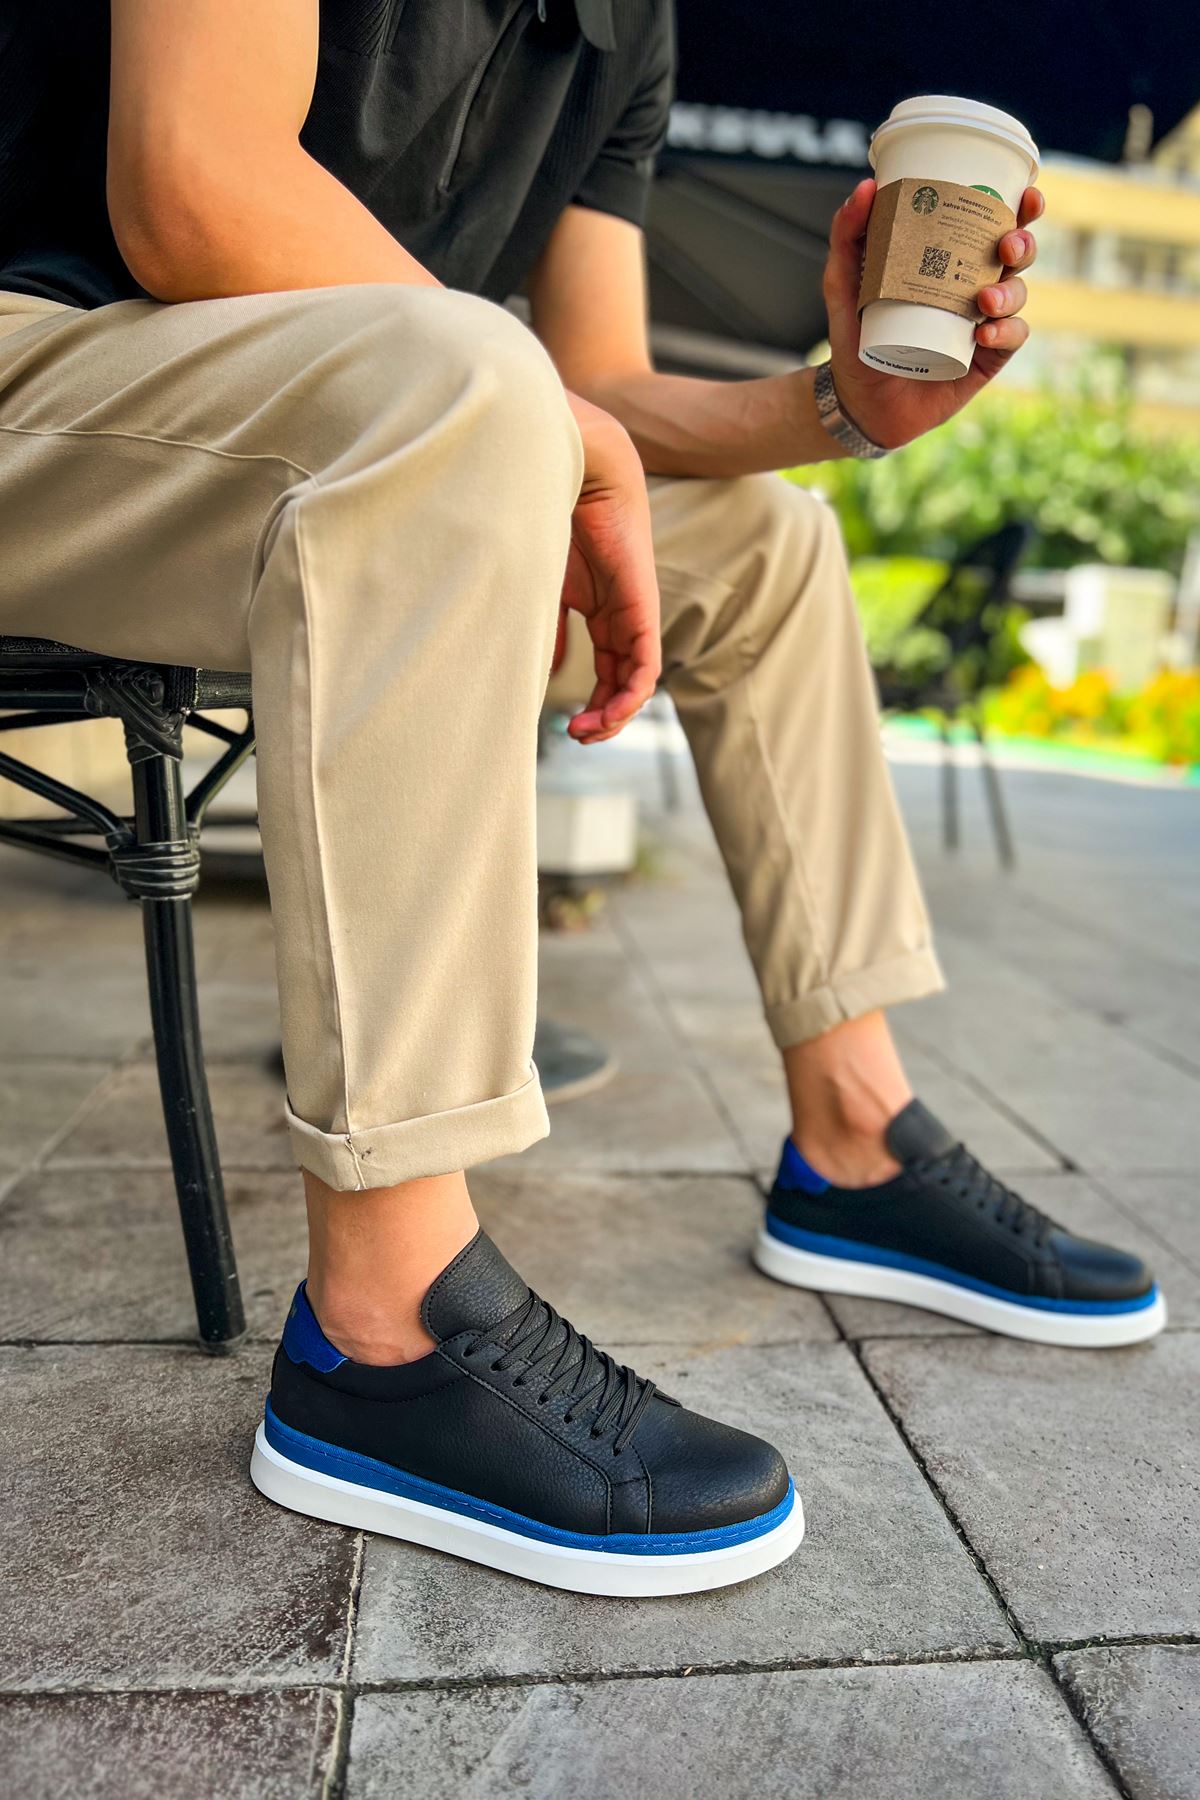 CH979 Santoni GBT Sport Men's Sneakers Shoes BLACK/BLUE - STREETMODE ™